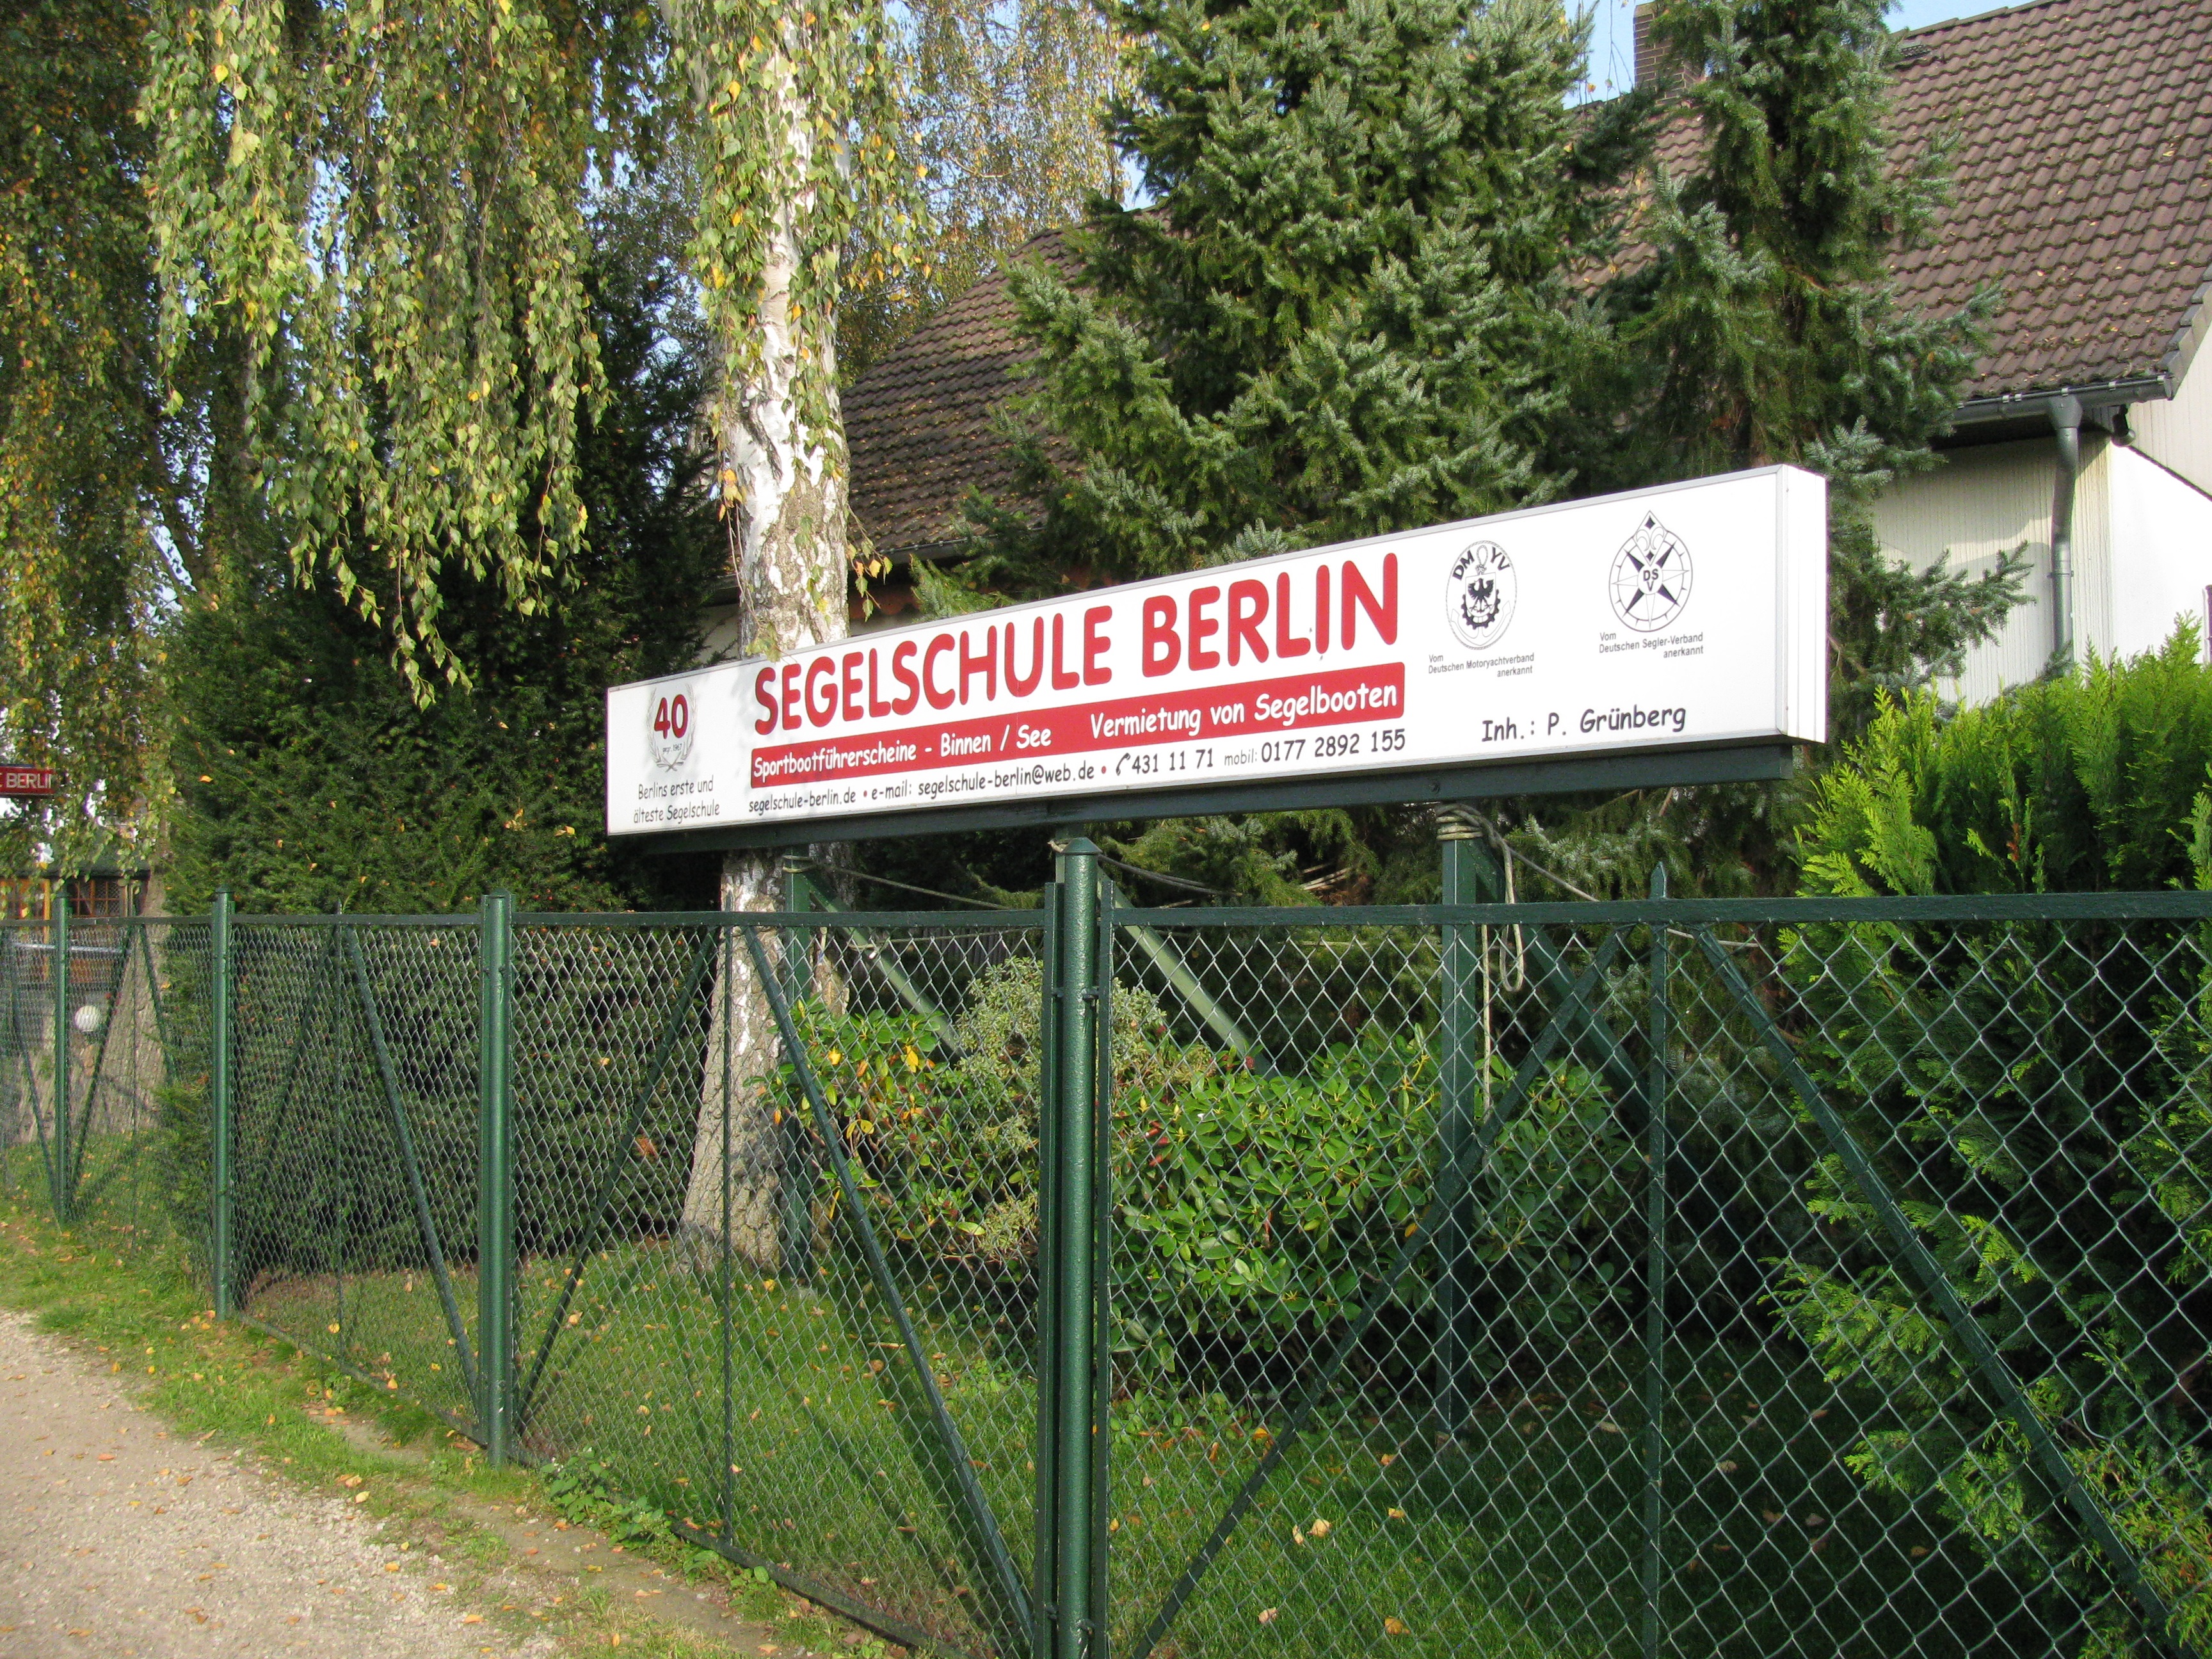 Segelschule Berlin im Oktober 2017.